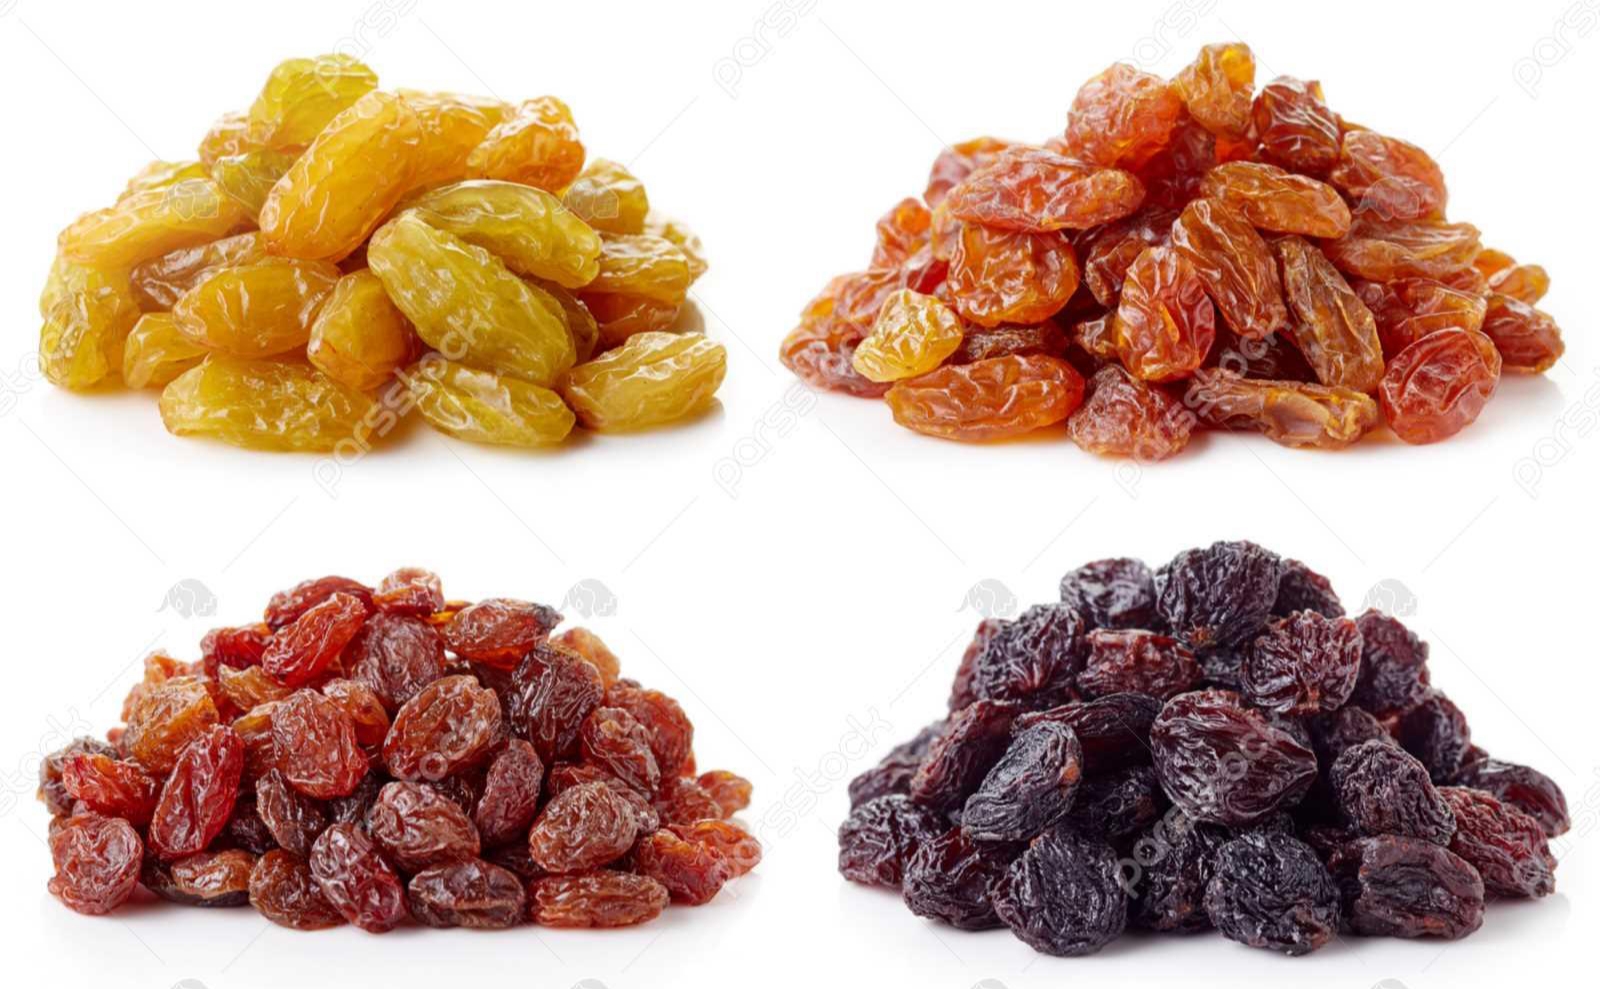 Export of raisins to Russia / Nutex Company